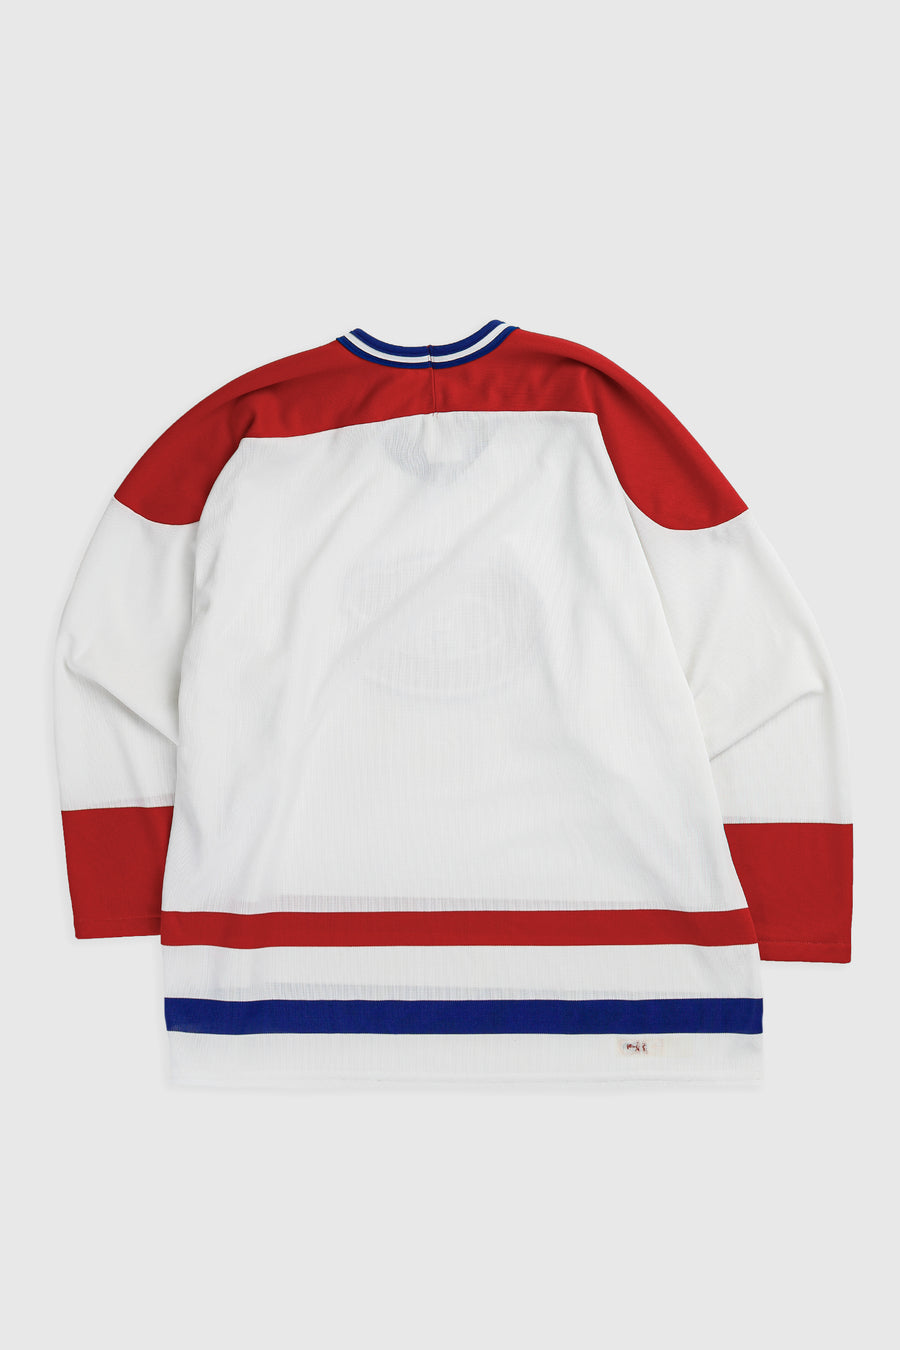 Vintage Montreal Canadiens NHL Jersey - Men's L